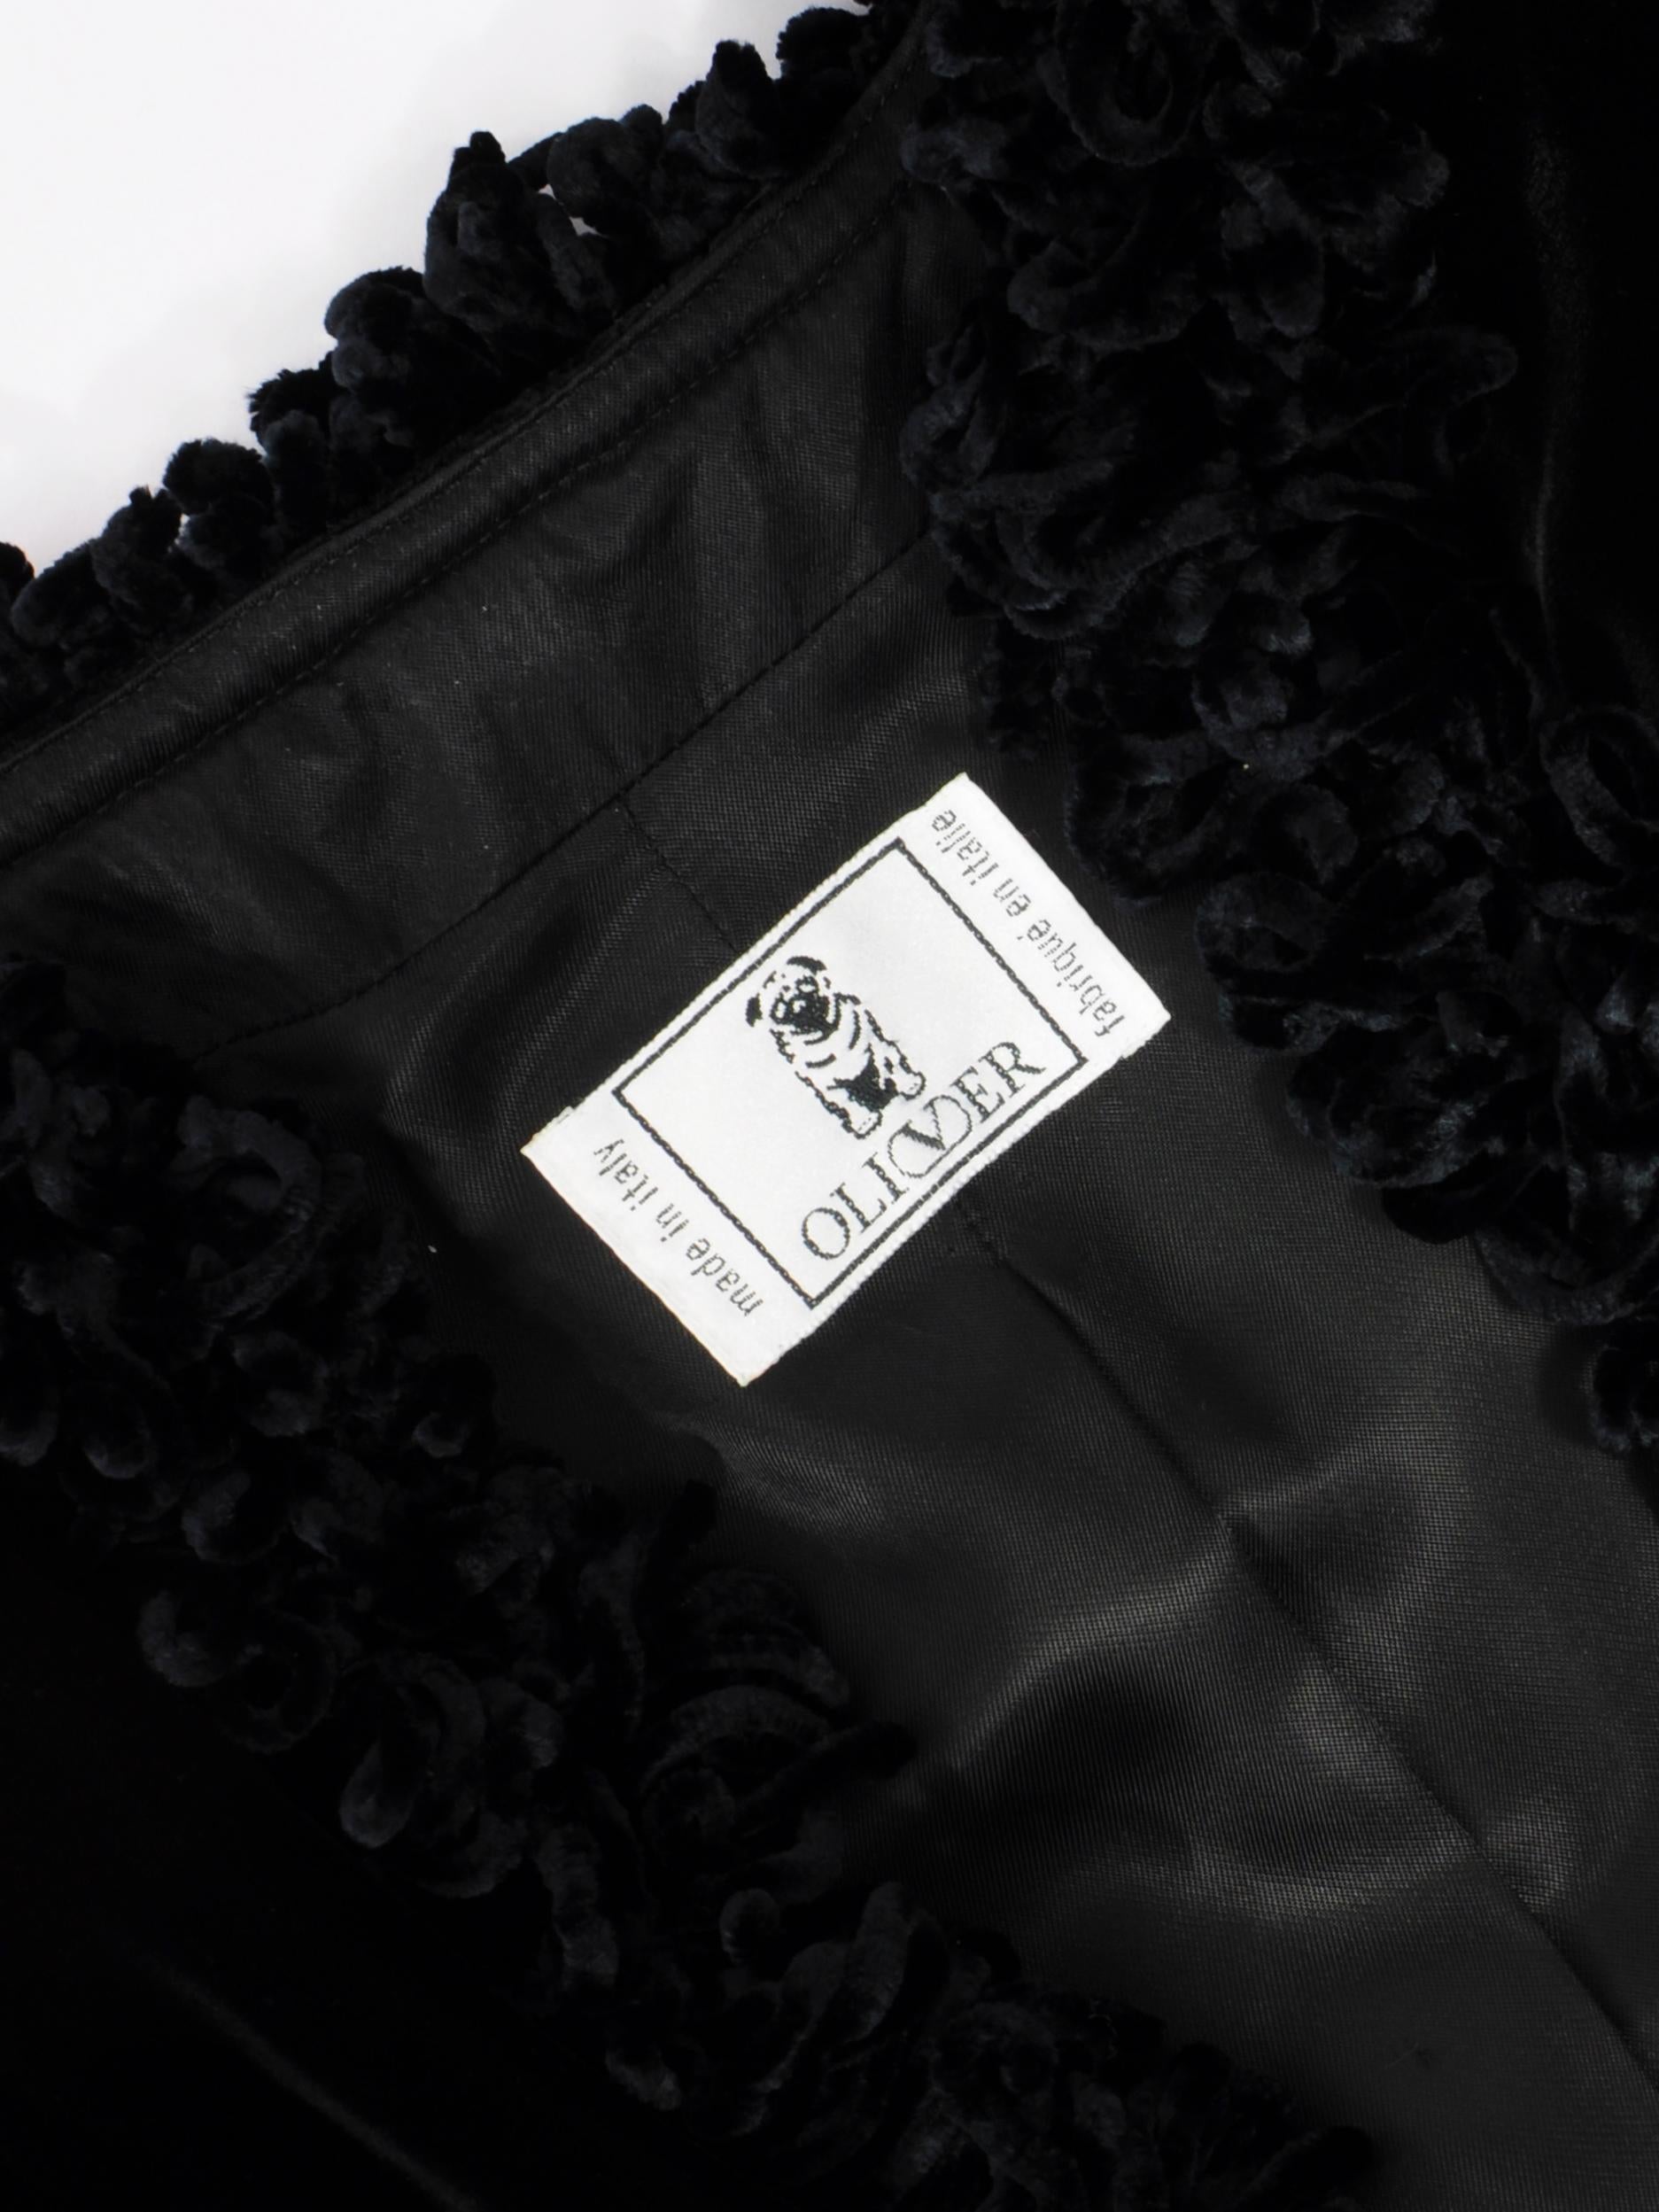 Oliver by Valentino Velvet Cropped Black Bolero Jacket Chenille Details 1990s 6